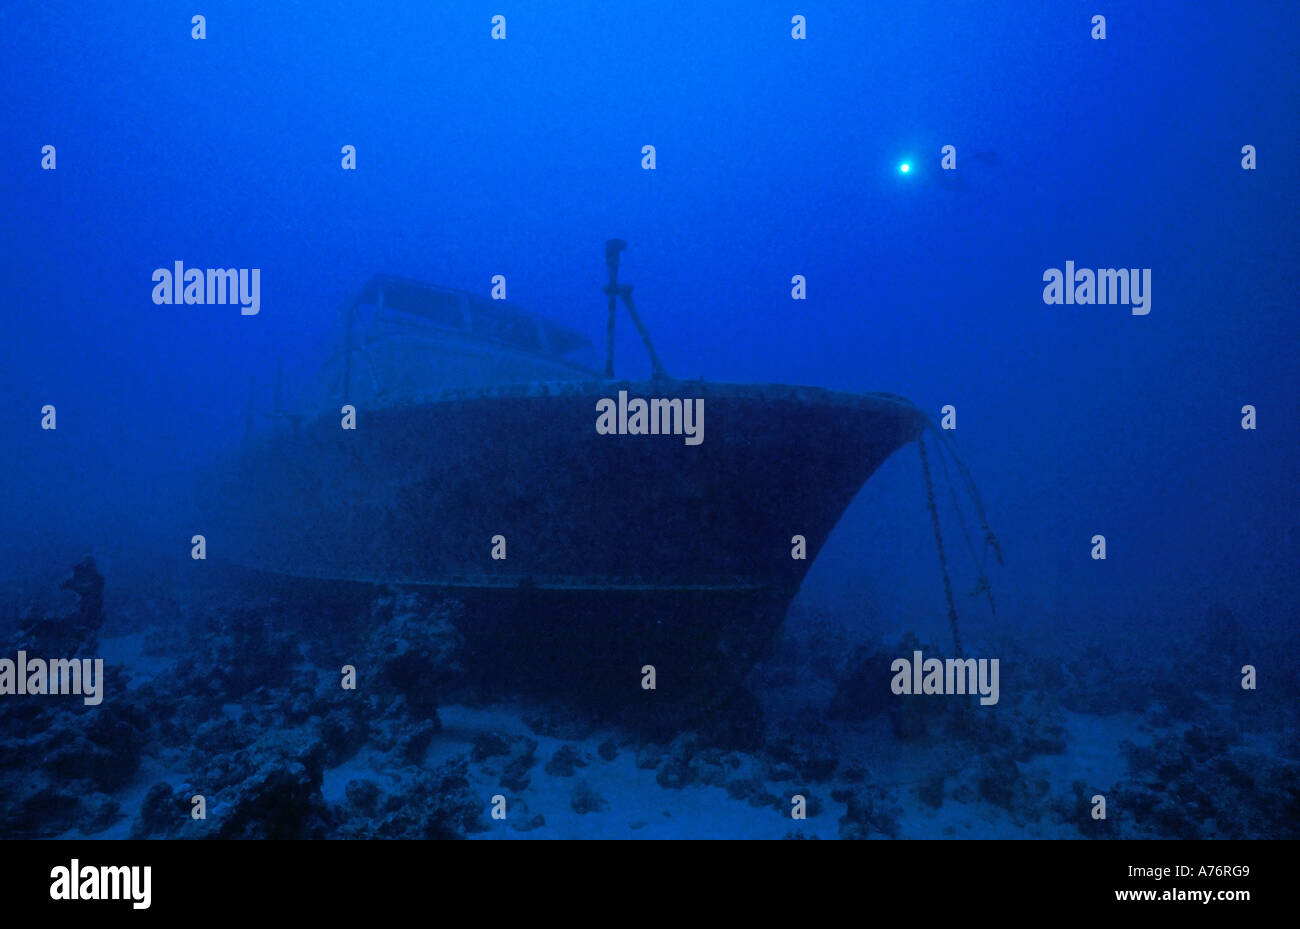 A scuba diver with a torch exploring a sunken ship wreck in murky water. Stock Photo